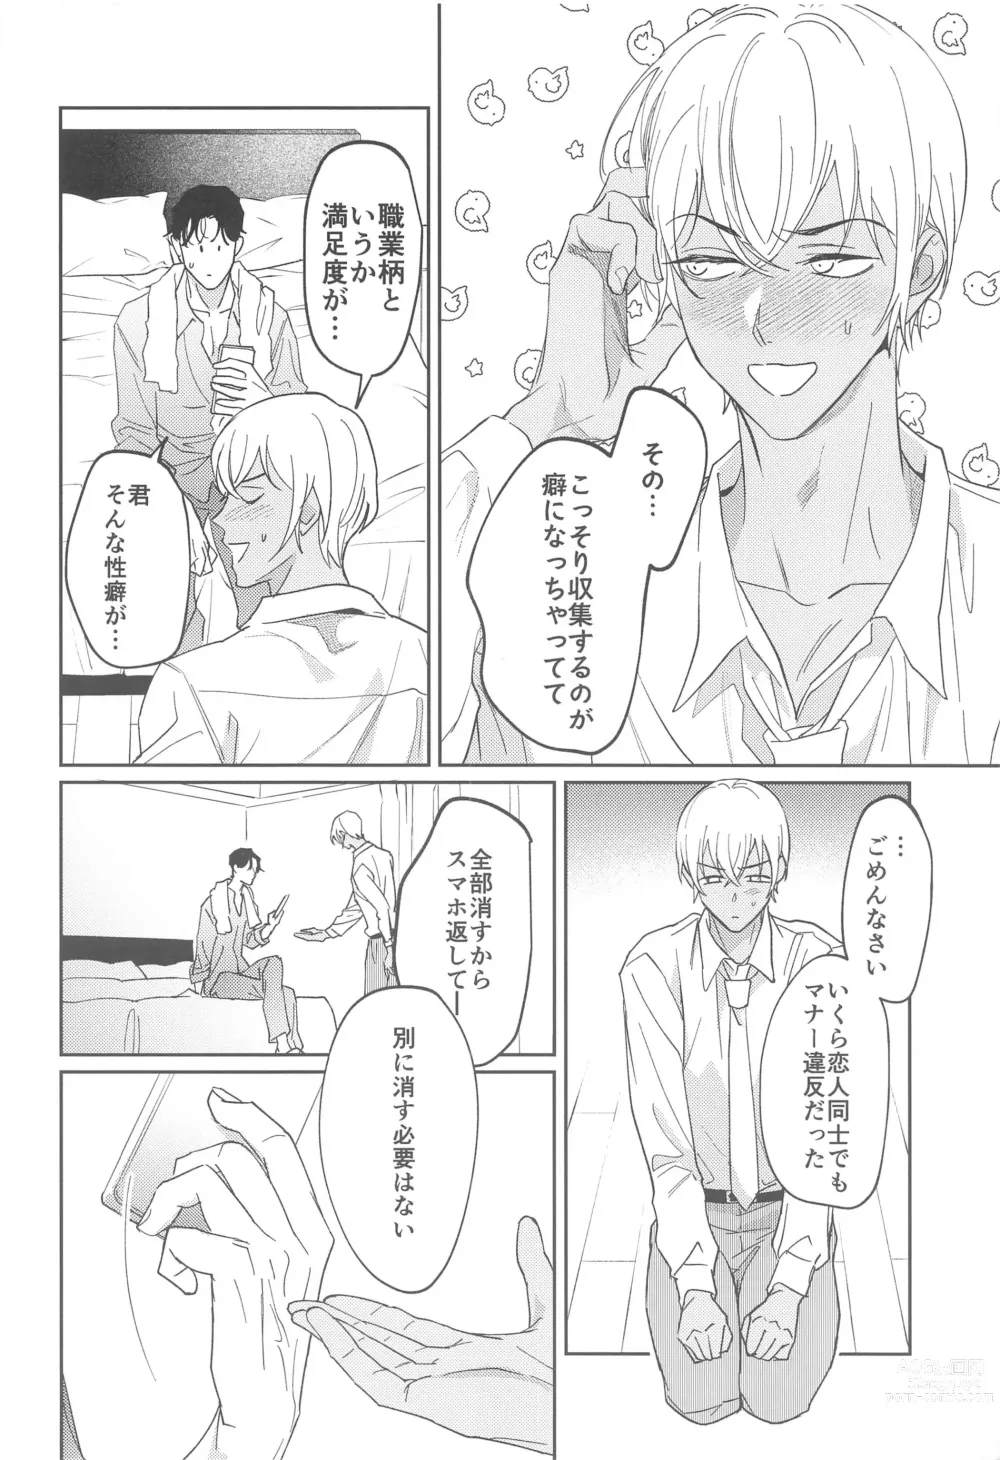 Page 11 of doujinshi REC